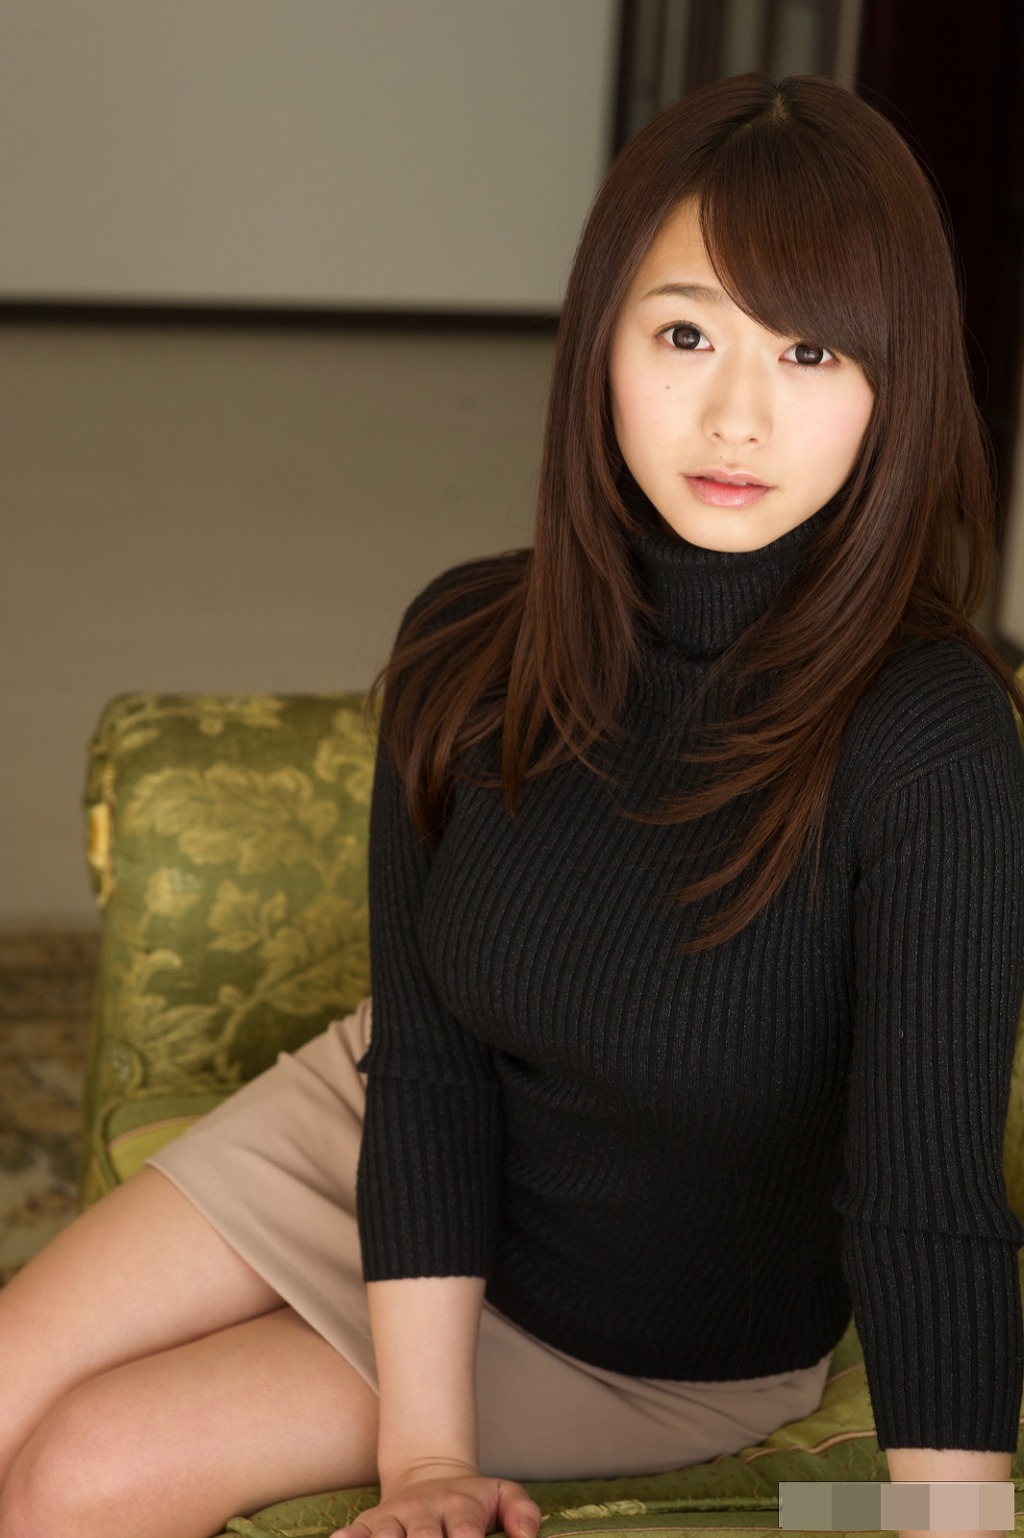 Sexy Collection Of Images Blog 시라이시 마리나 Marina Shiraishi 白石茉莉奈 의